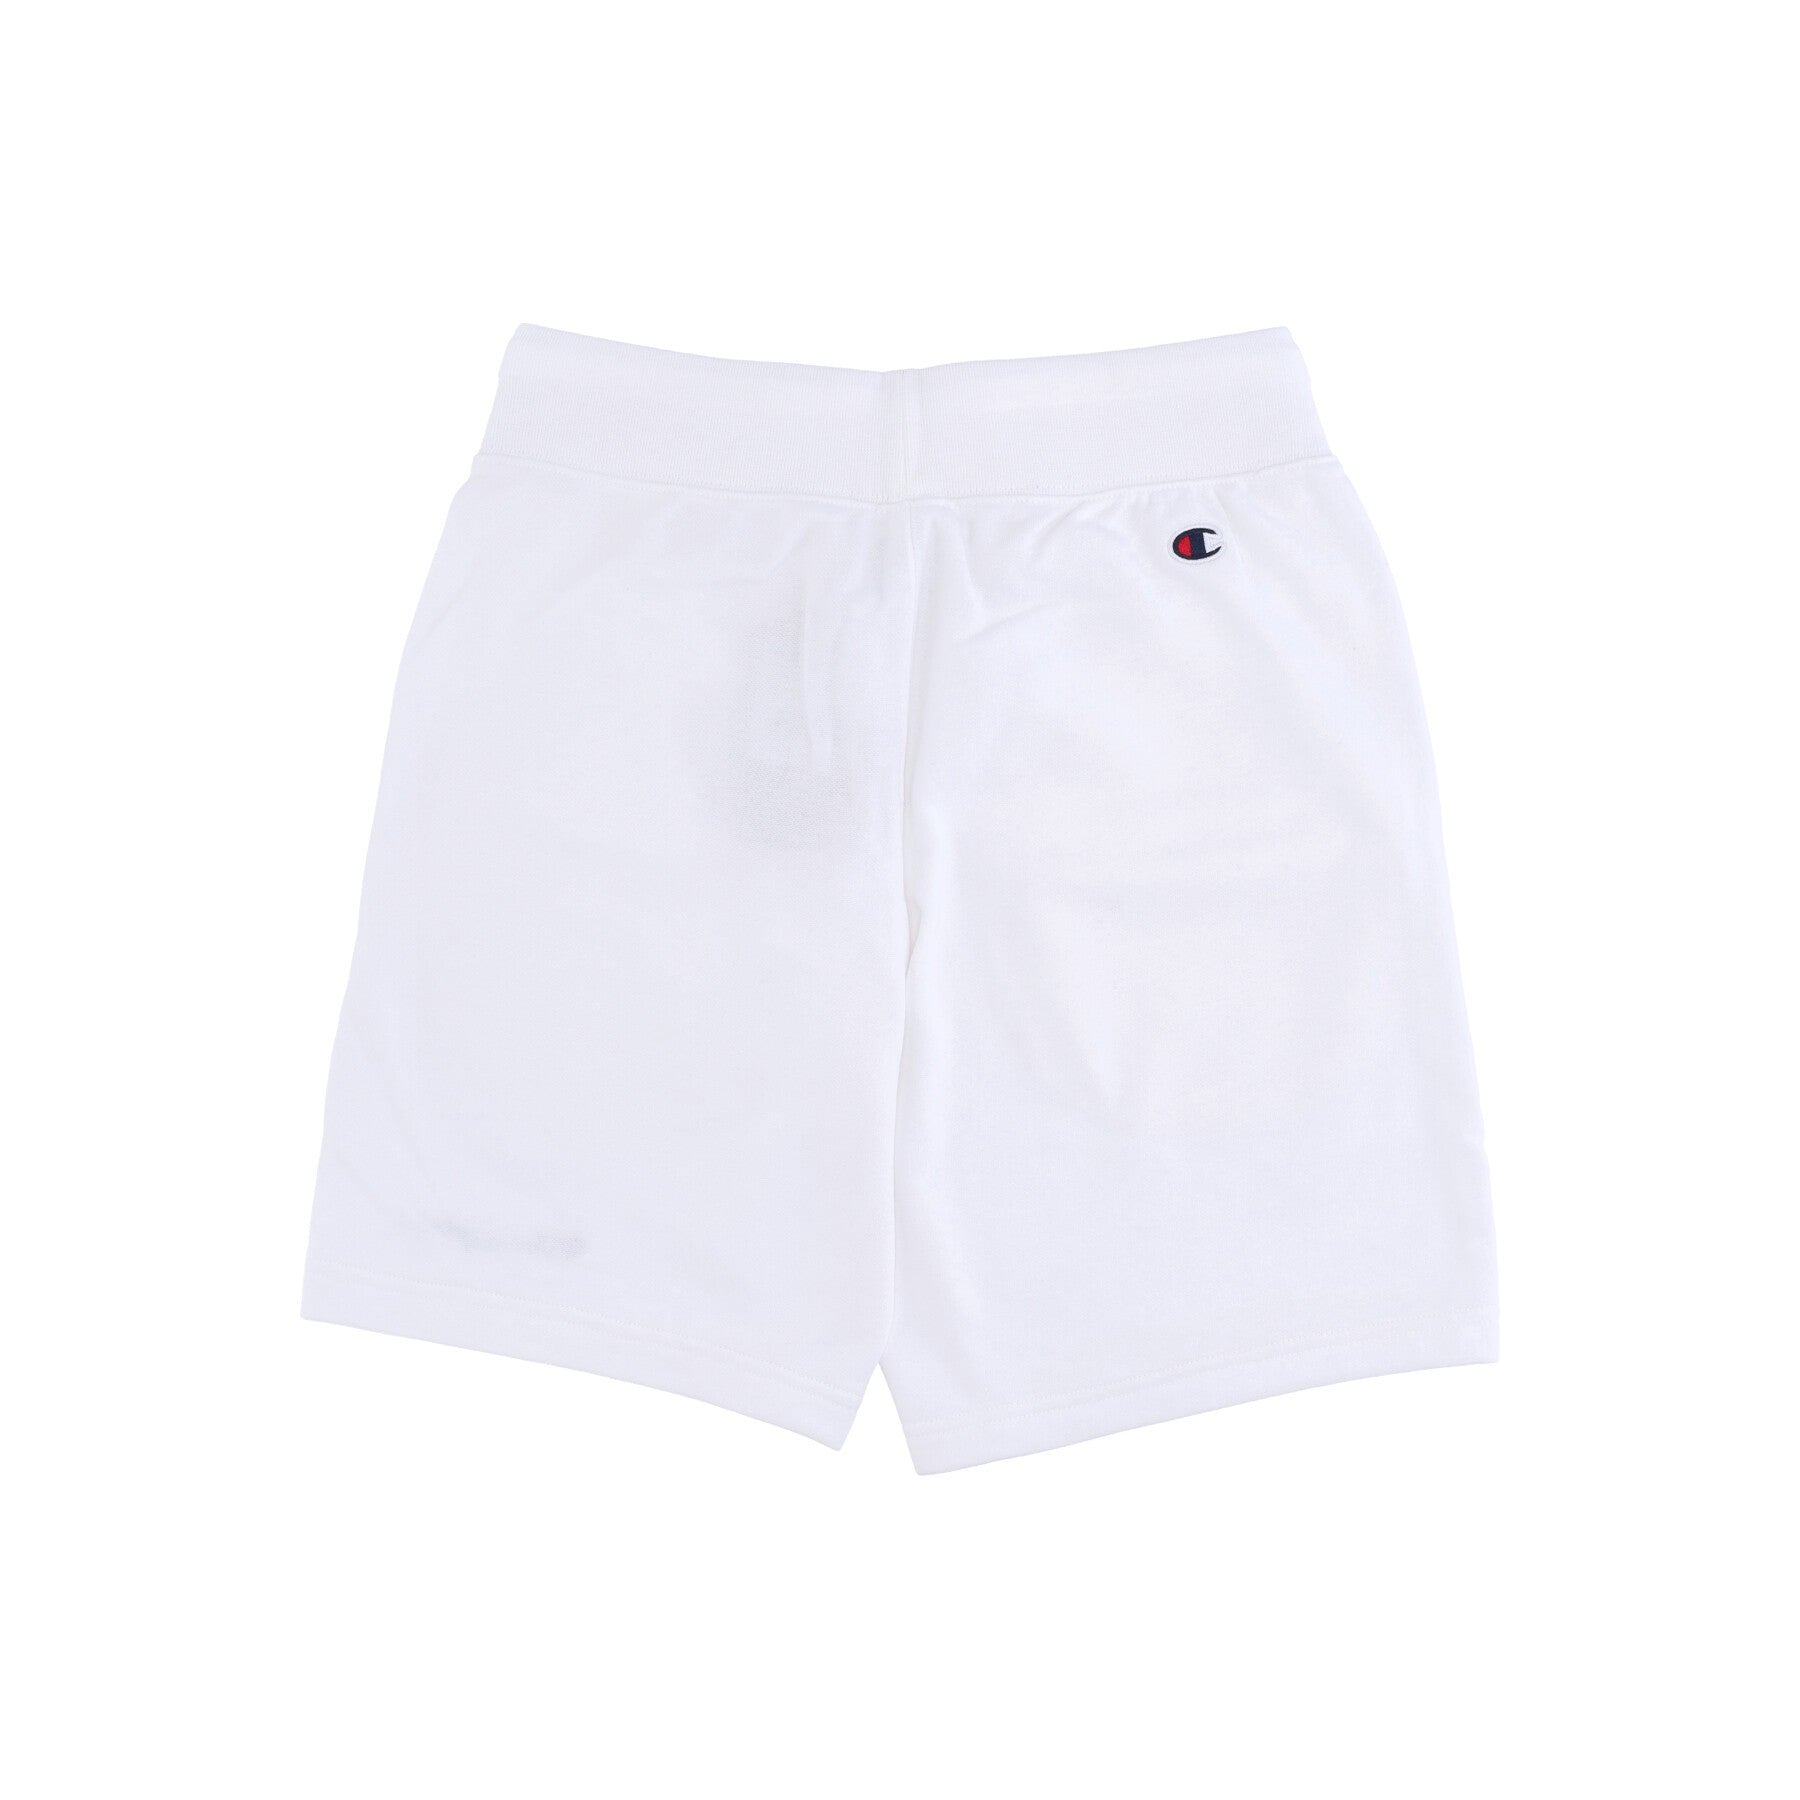 Short Men's Tracksuit Pants Bermuda White